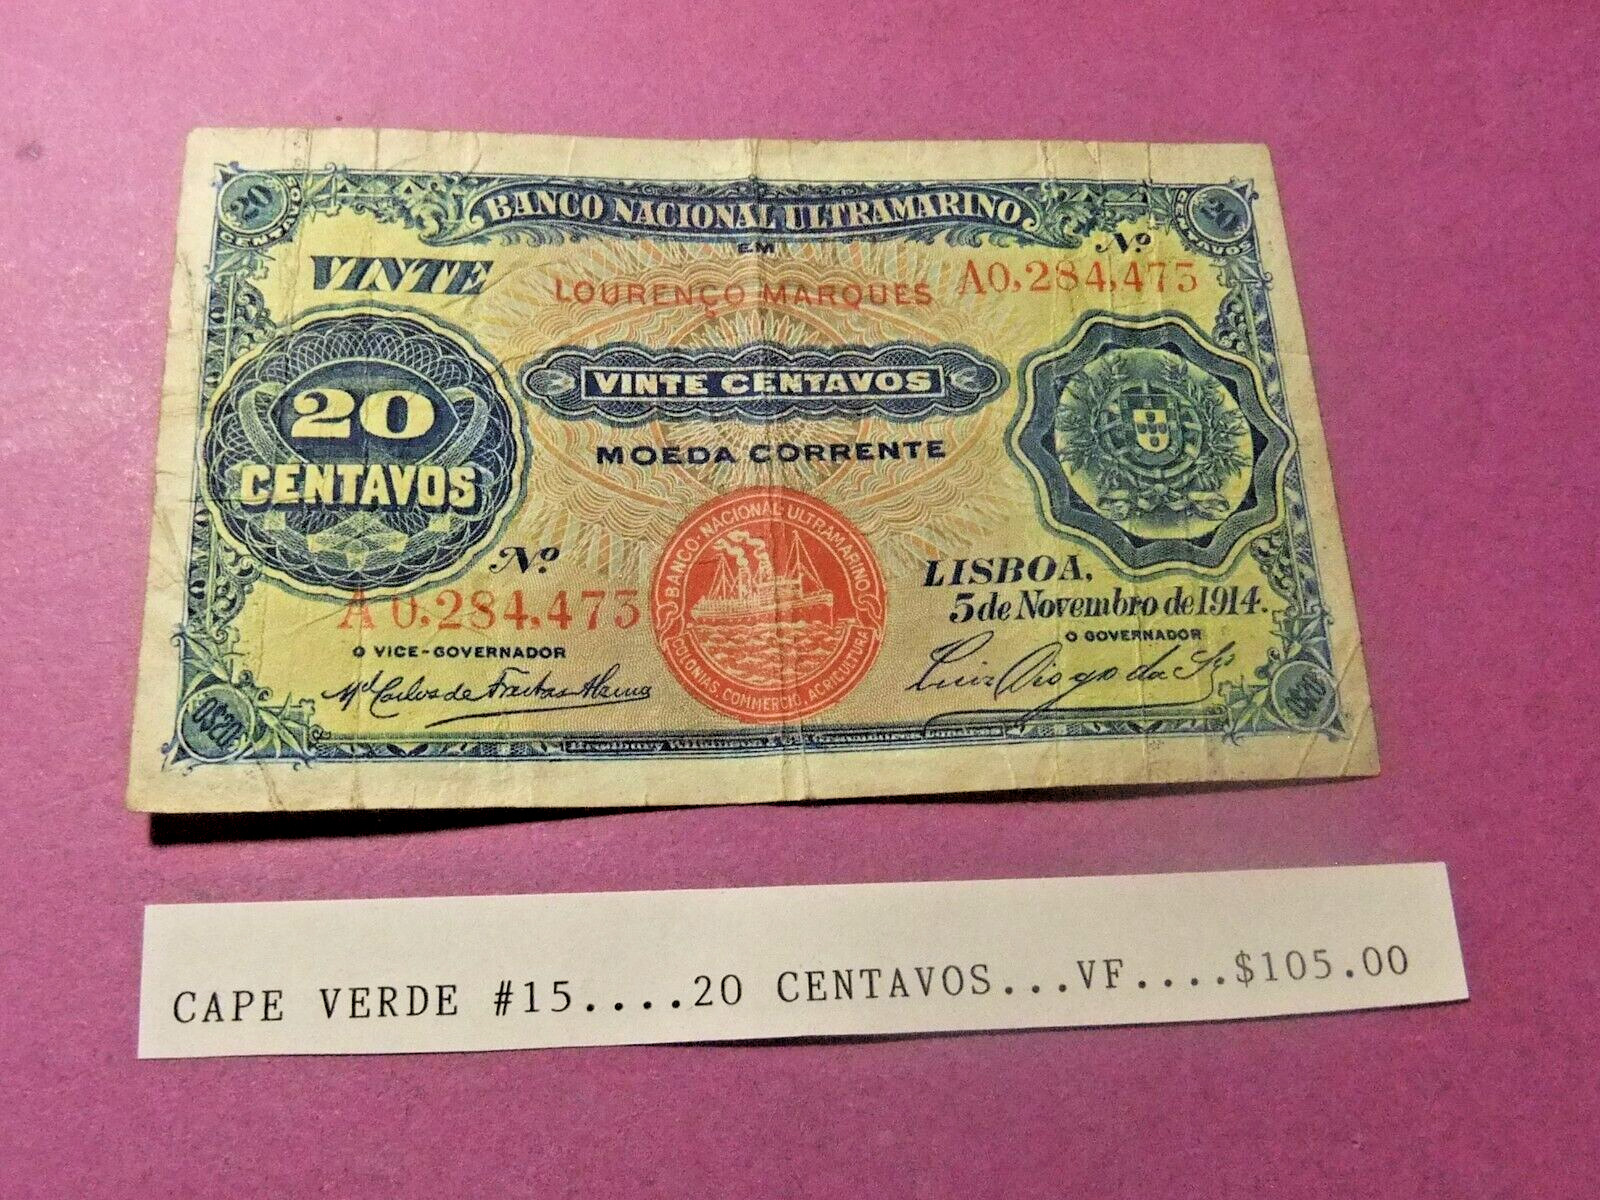 VERY RARE 1914 Cape Verde 20 CENTAVOS Banknote - VF